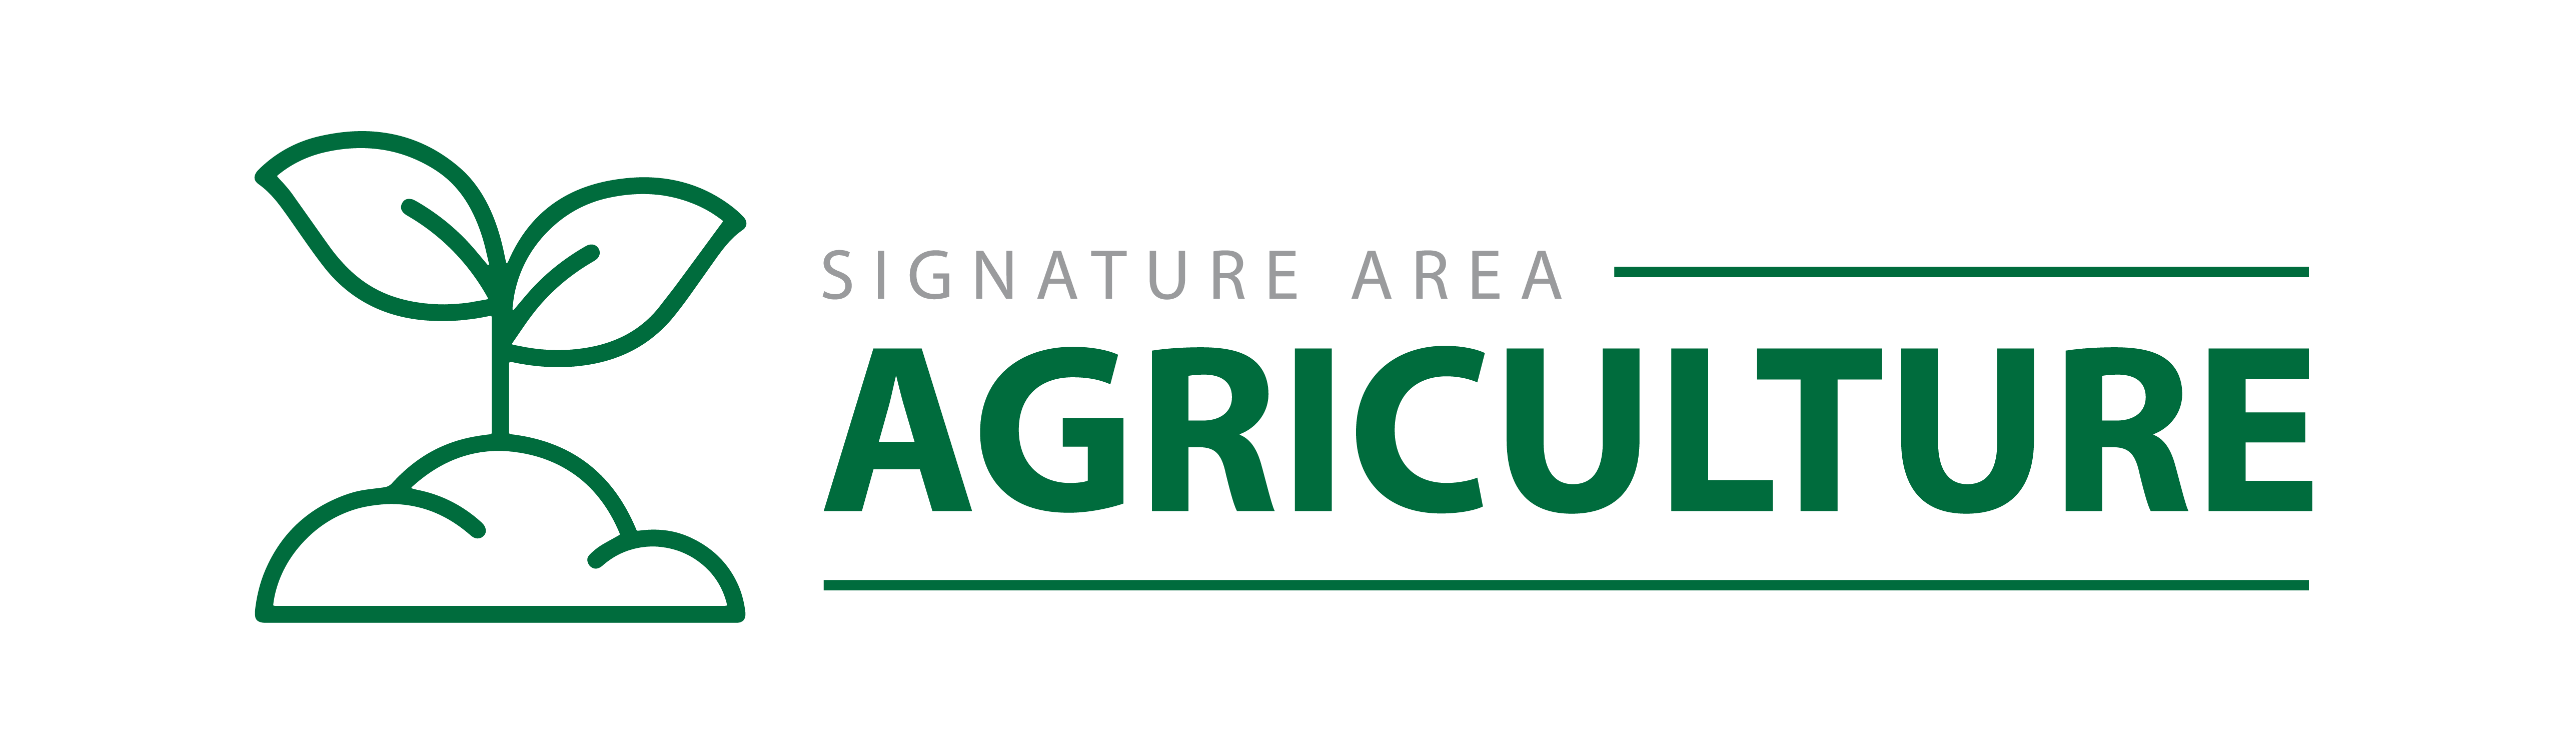 Agriculture Signature Area